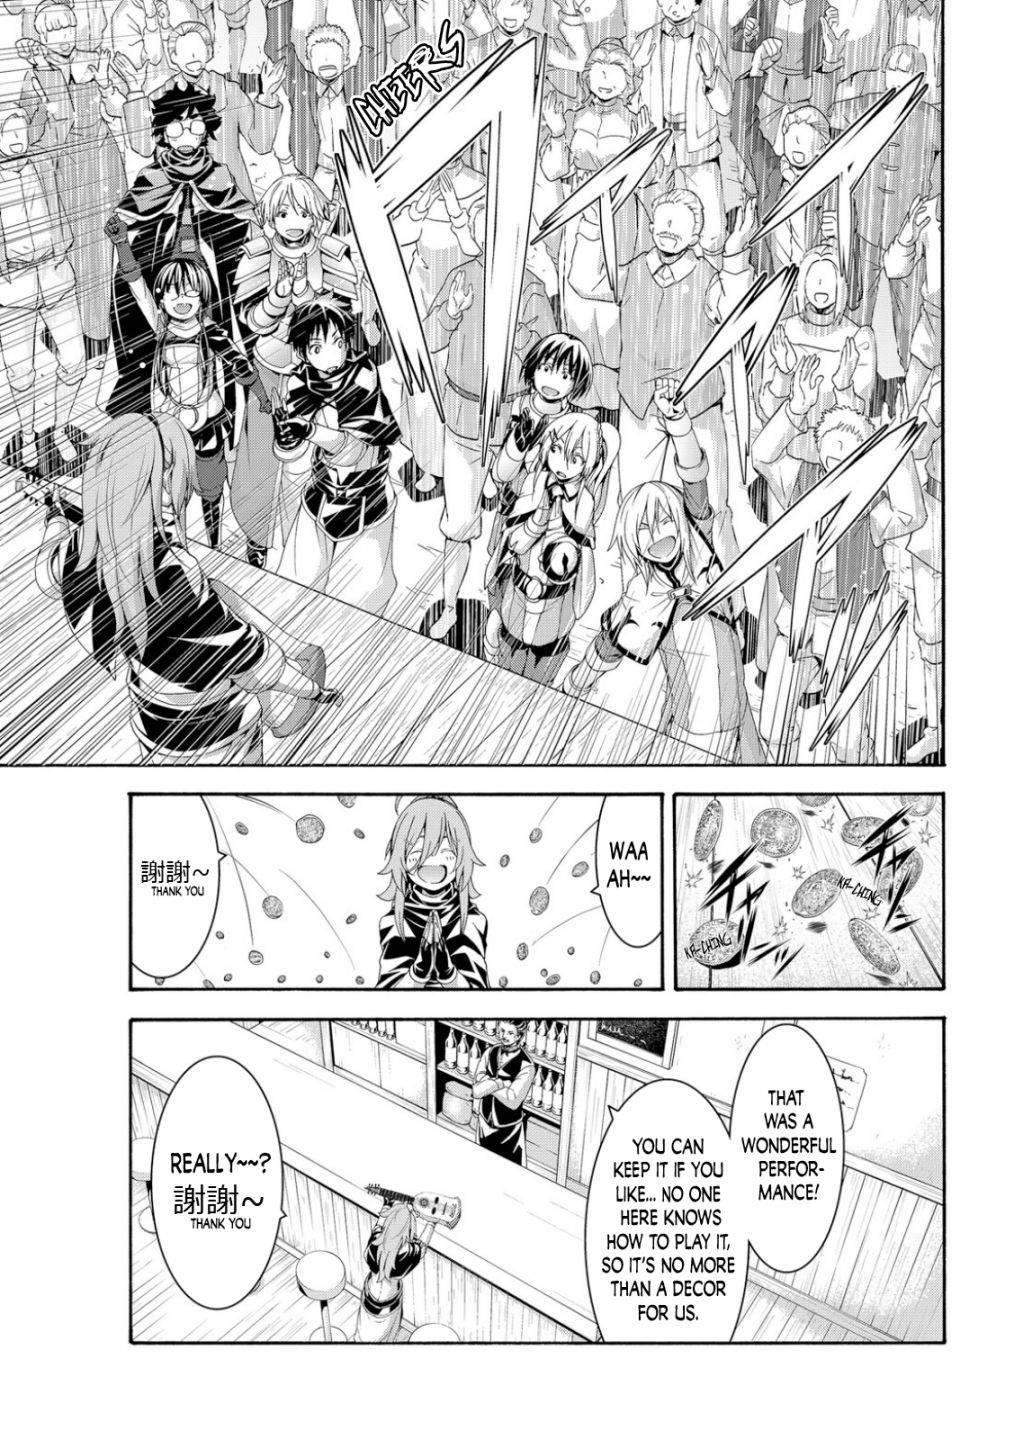 100-man no Inochi no Ue ni Ore wa Tatteiru Manga - Chapter 67 - Manga Rock  Team - Read Manga Online For Free